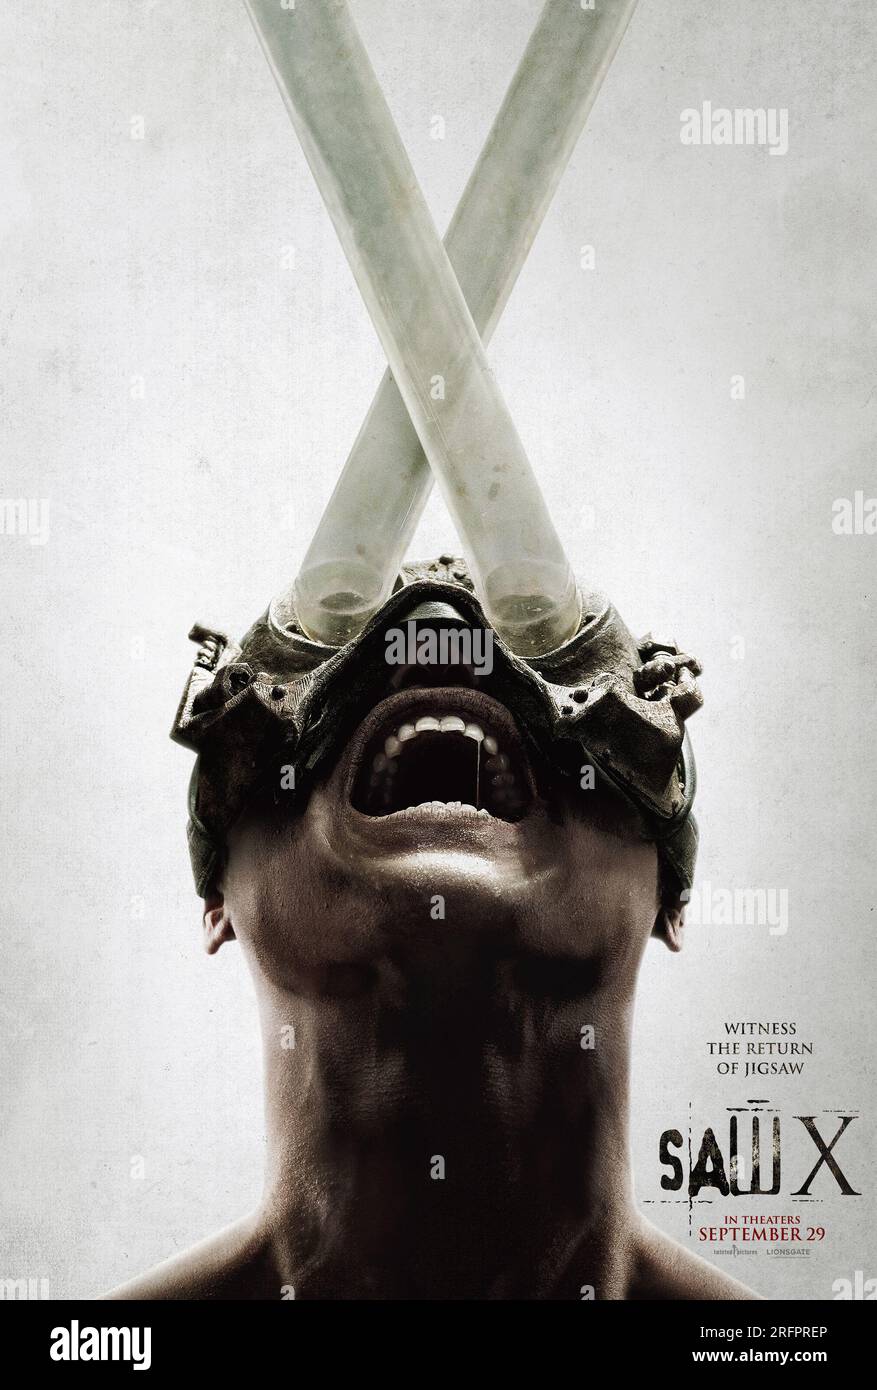 Saw X movie poster Stock Photo